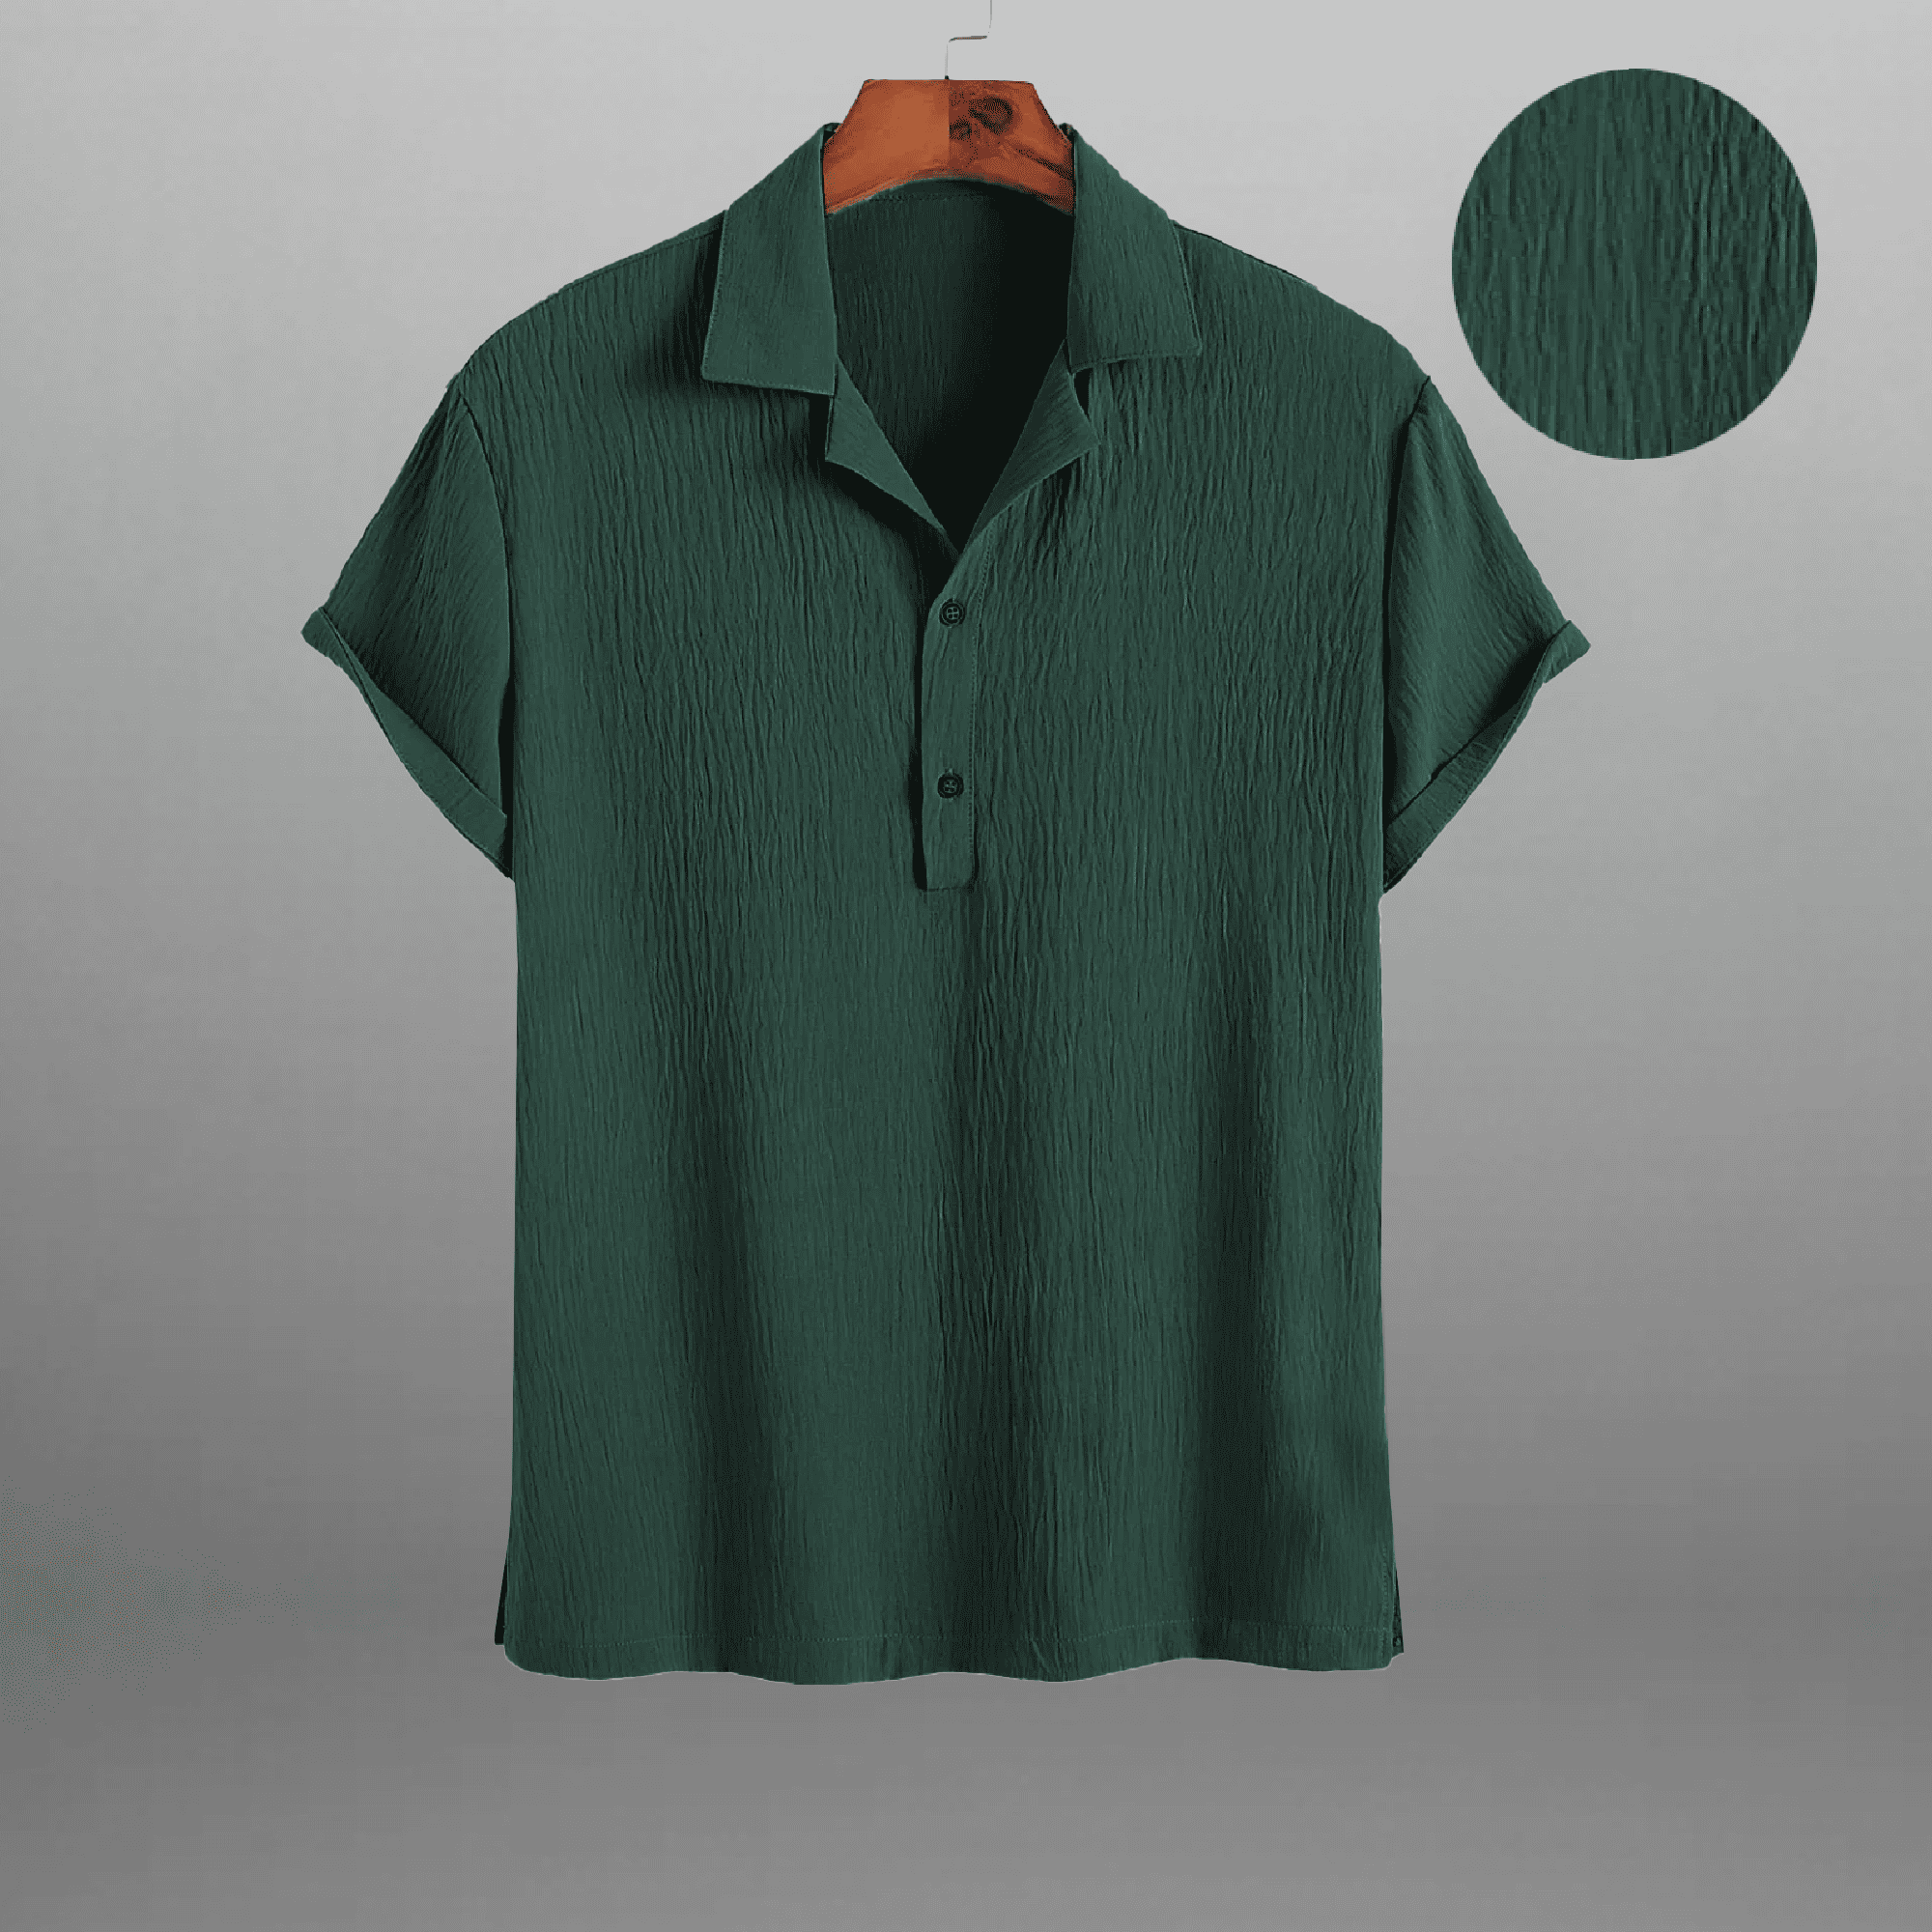 Men's Forest Green Textured T-shirt style shirt-RMS026